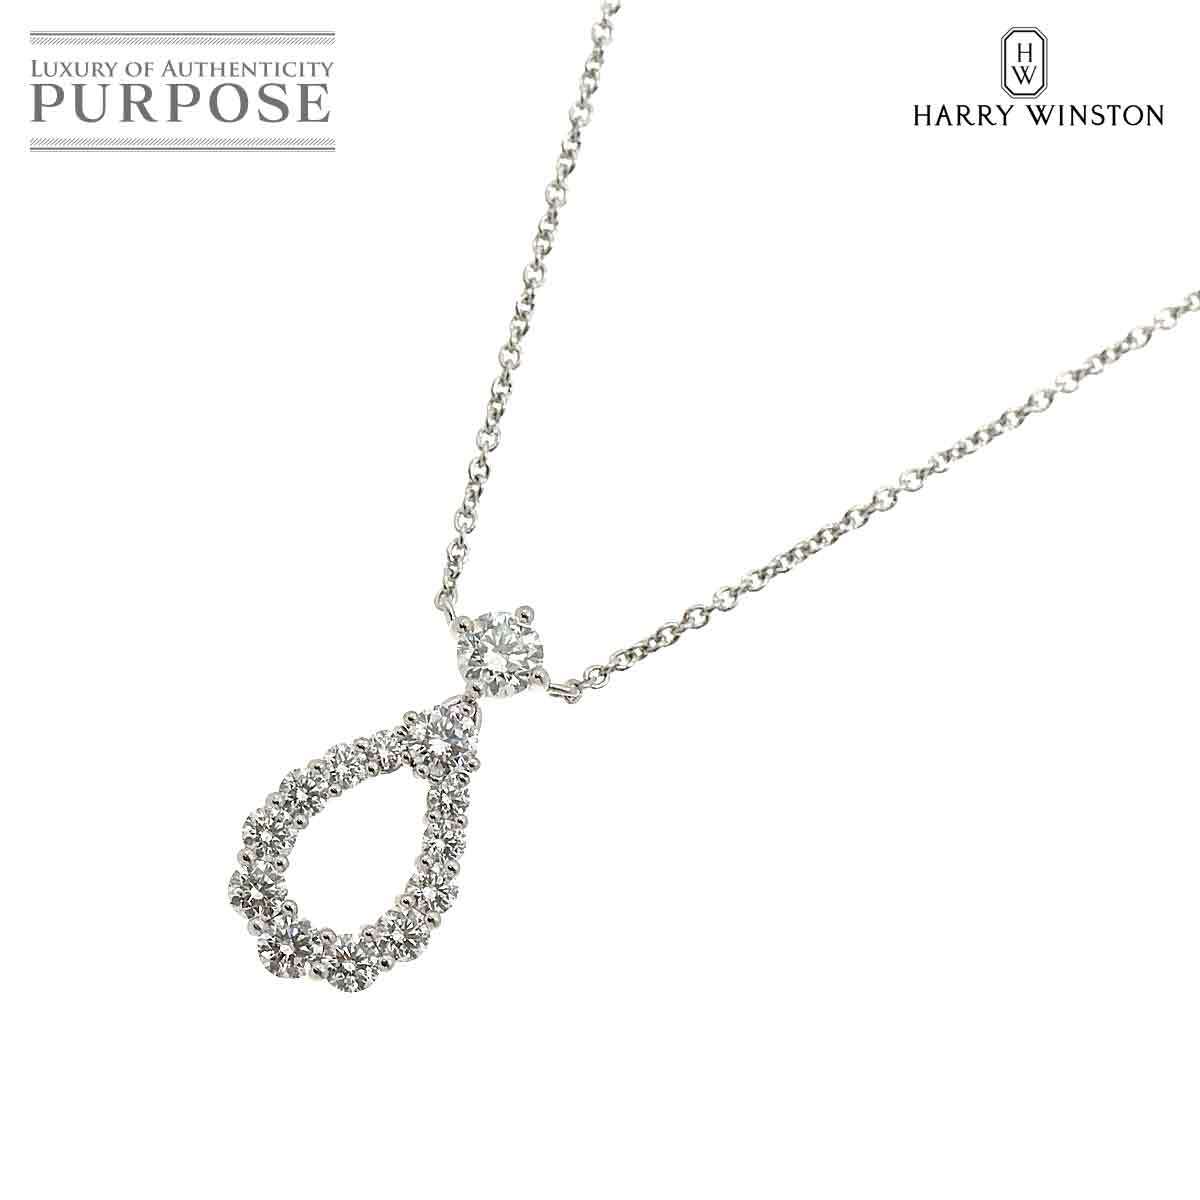  Harry Winston HARRY WINSTON HW петля diamond колье 41cm Pt платина medium Diamond Necklace [ сертификат ] 90229814